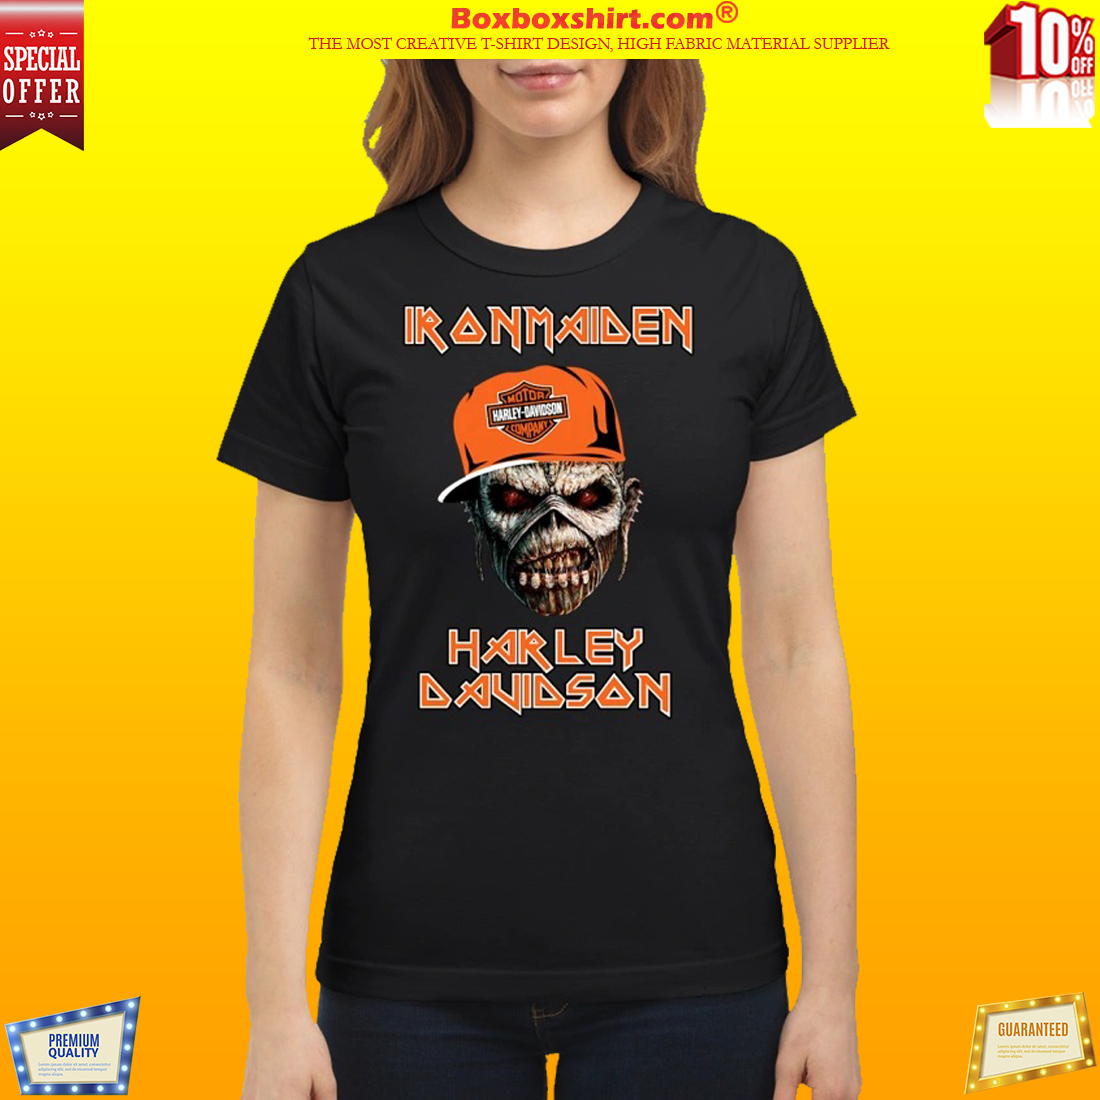 Iron maiden Harley Davidson skull t classic shirt